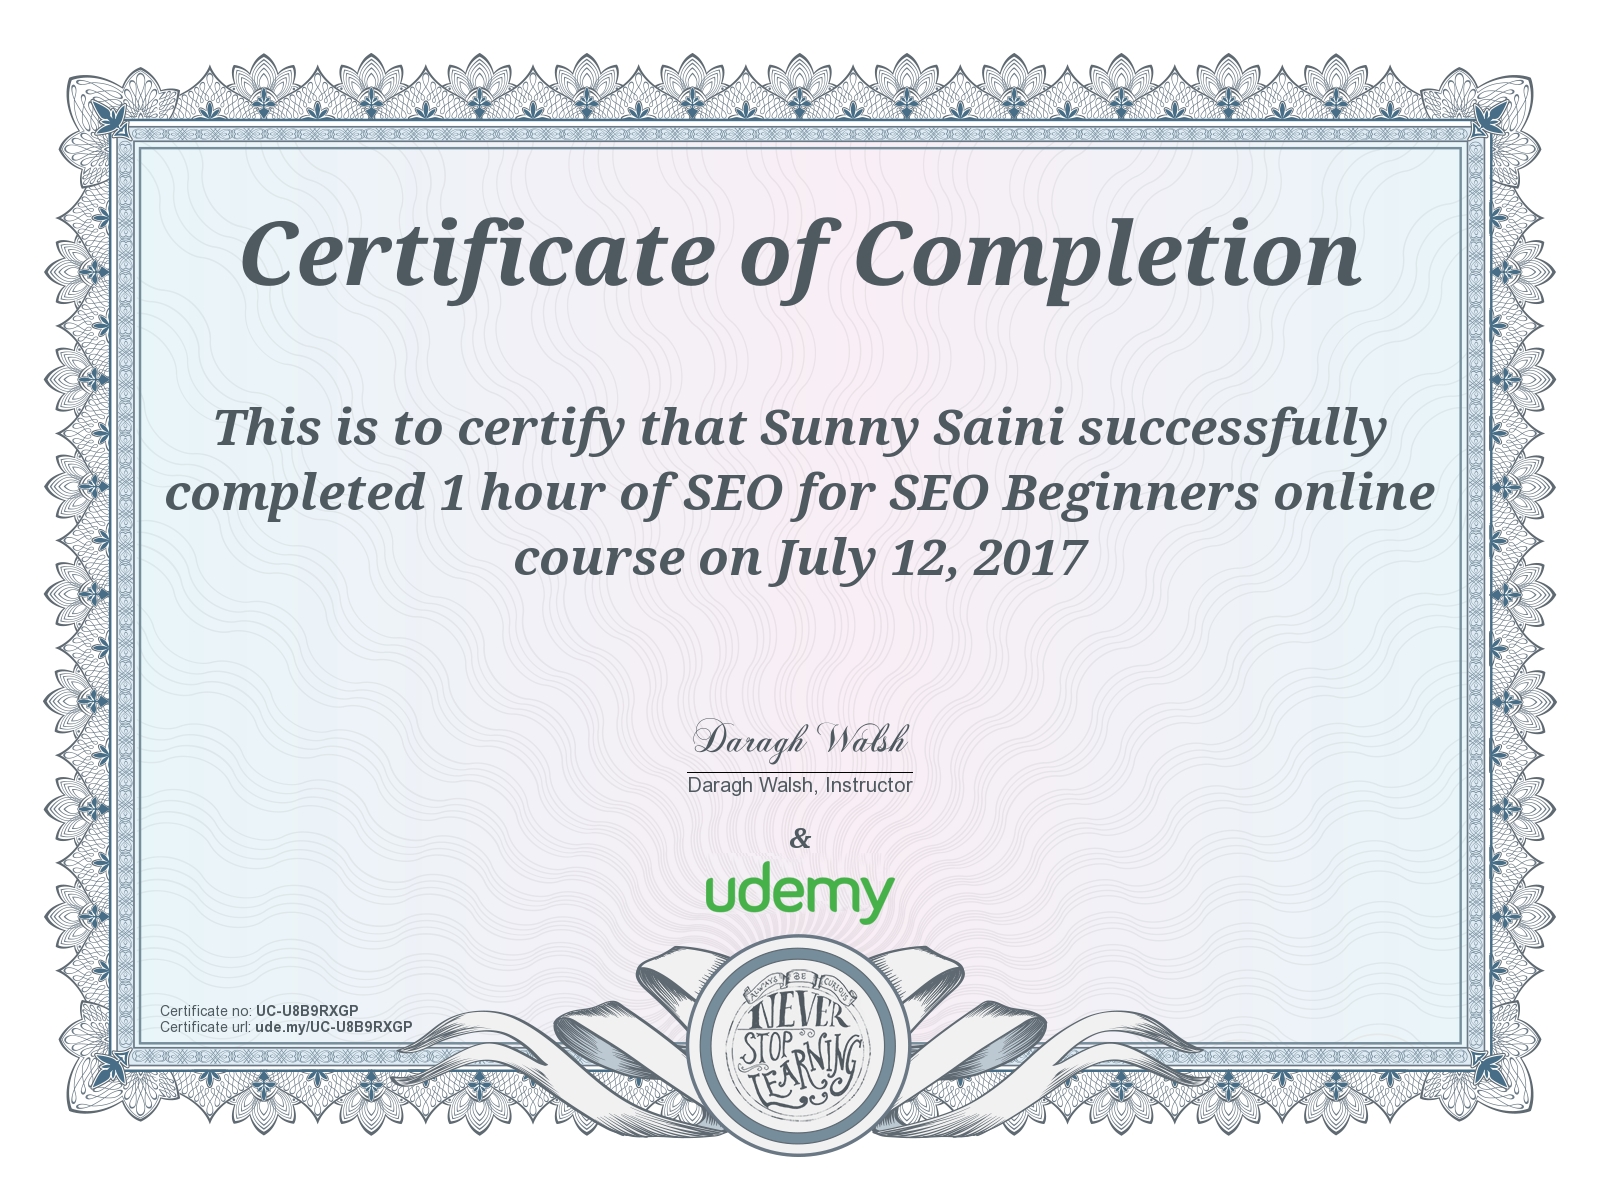 SEO Certificate by Udemy